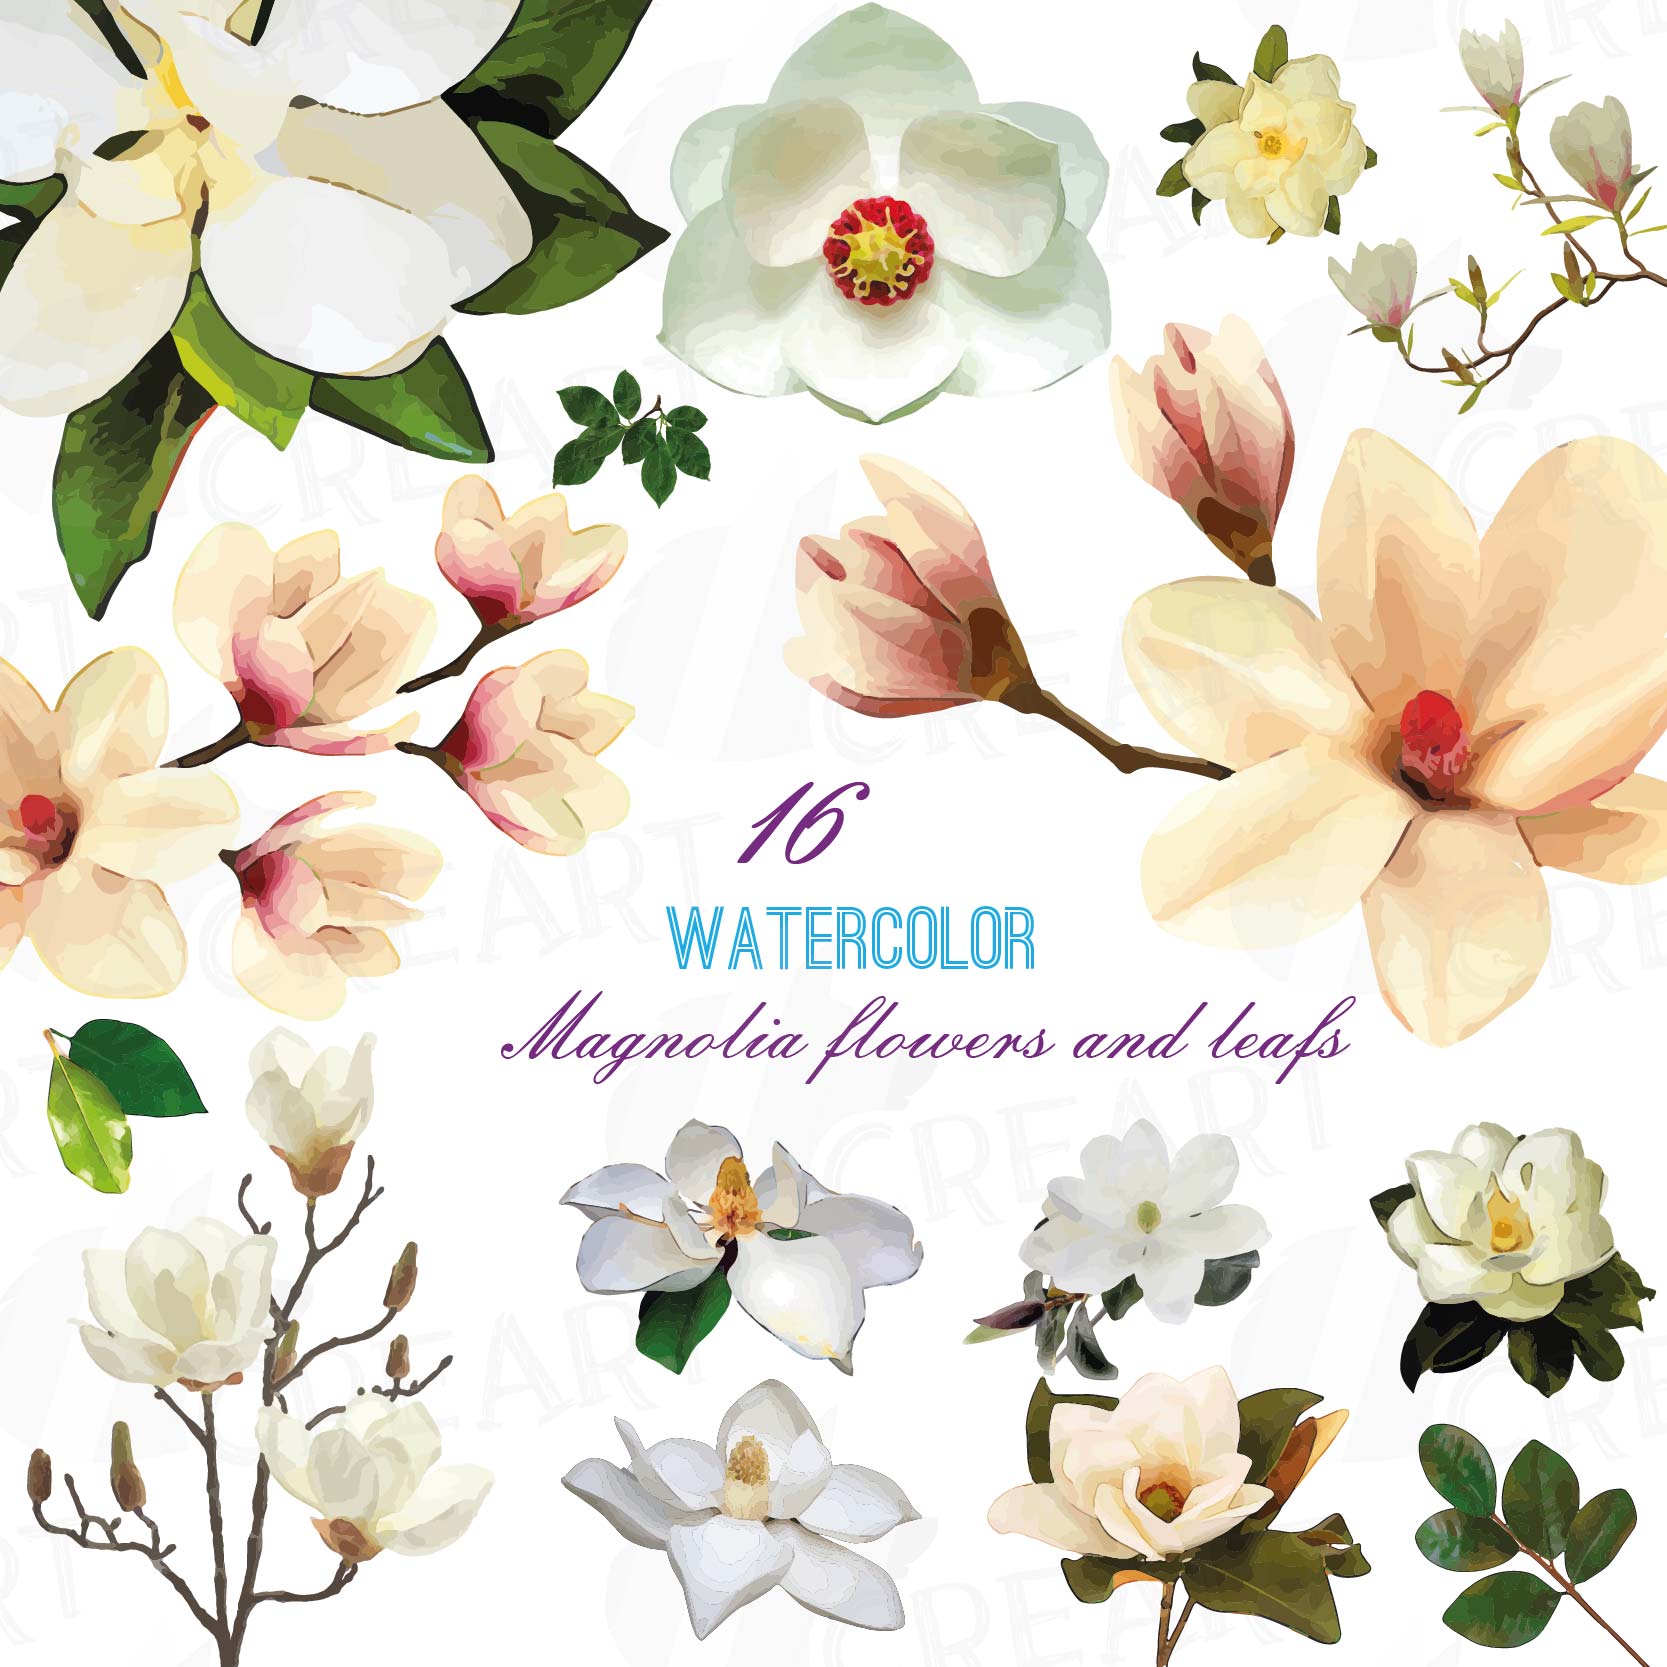 magnolia clipart vector